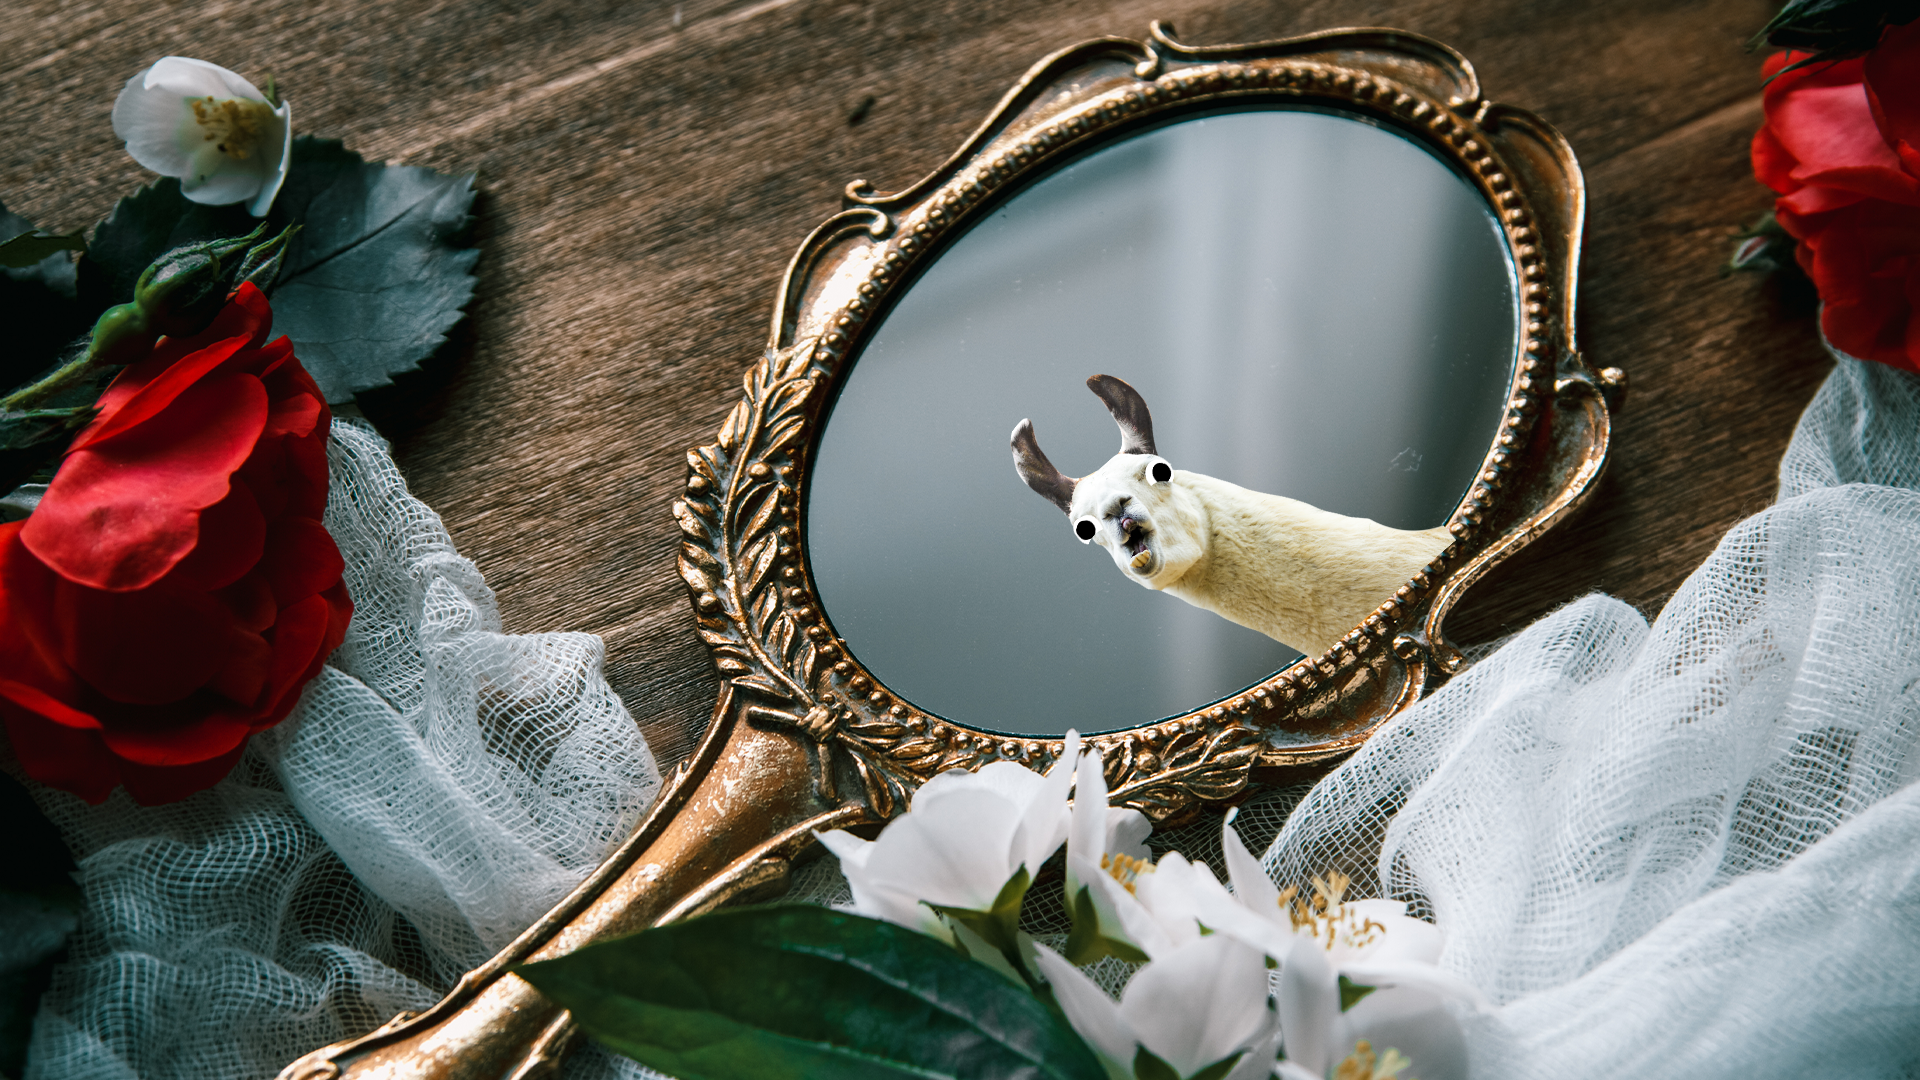 Magic mirror showing derpy llama